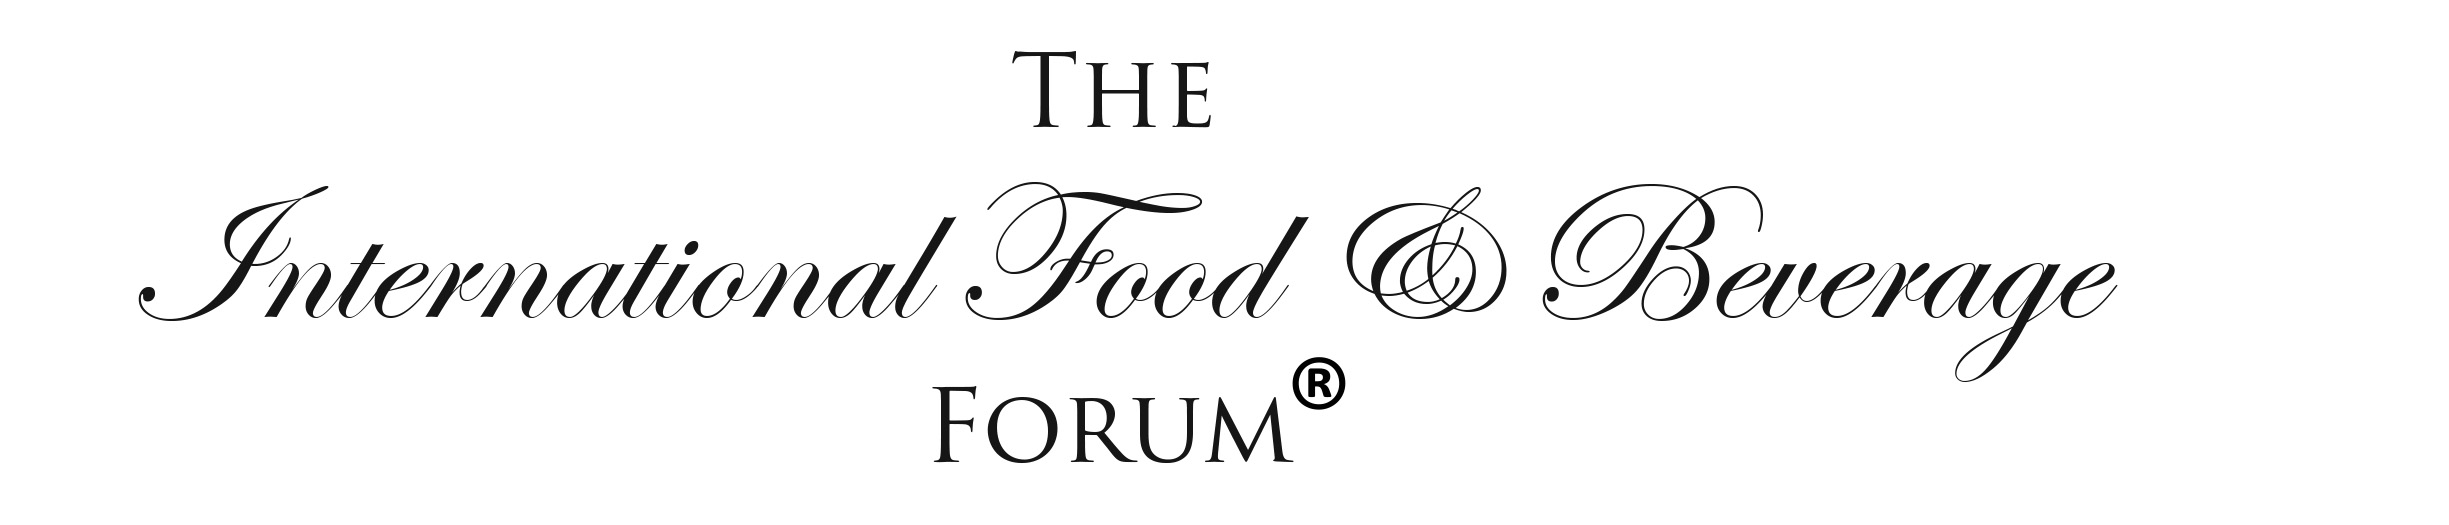 International Food & Beverage Forum Continues Scholarships, Adds Regional VPs